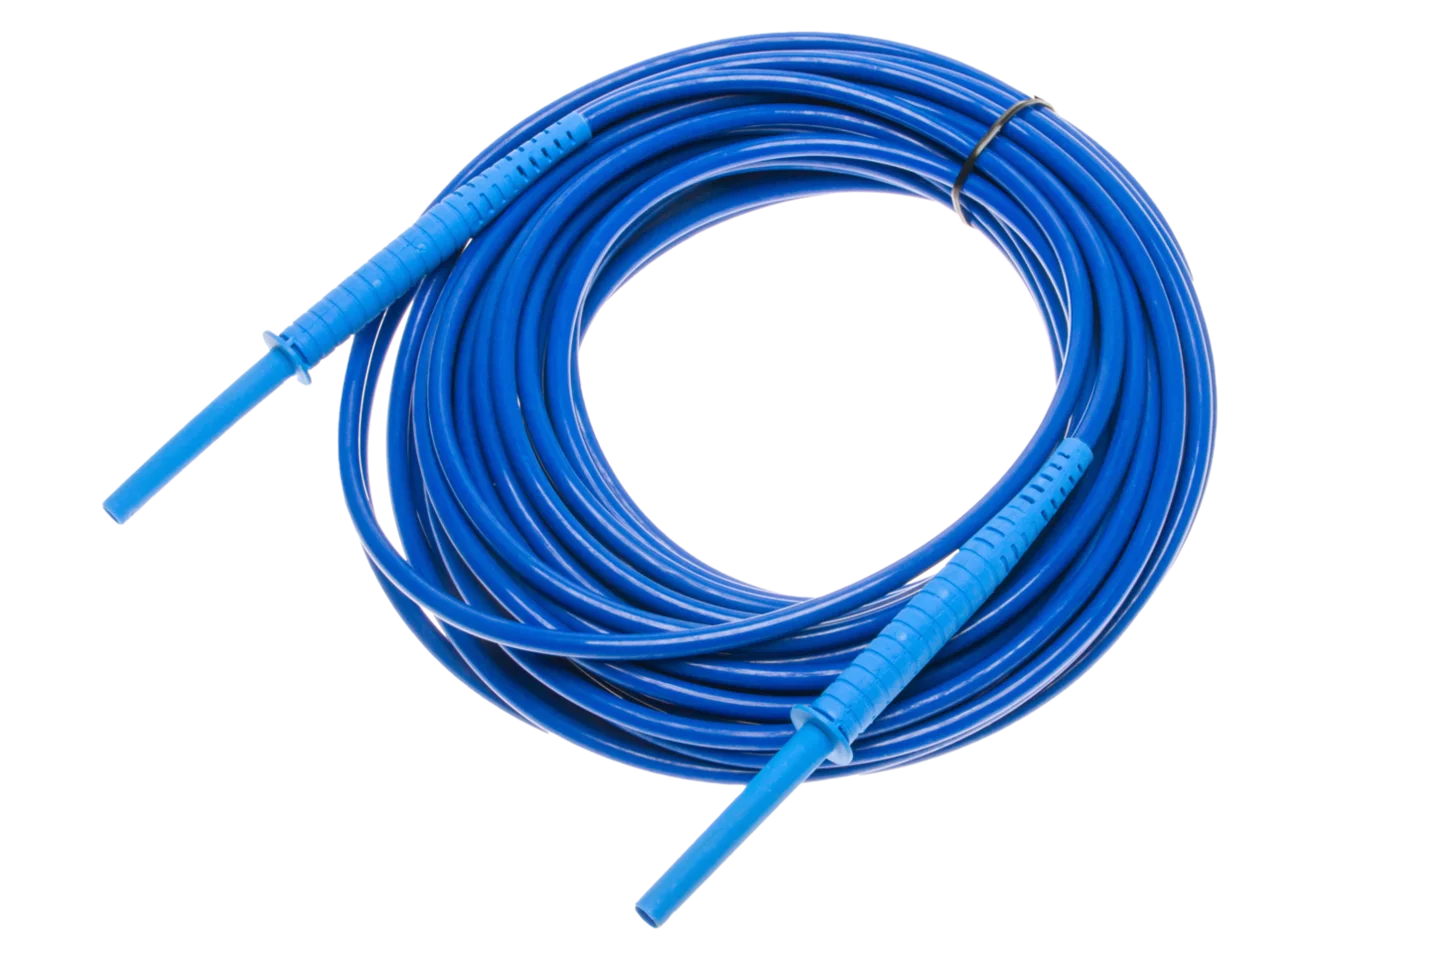 Test lead 20 m 11 kV (banana plugs) blue